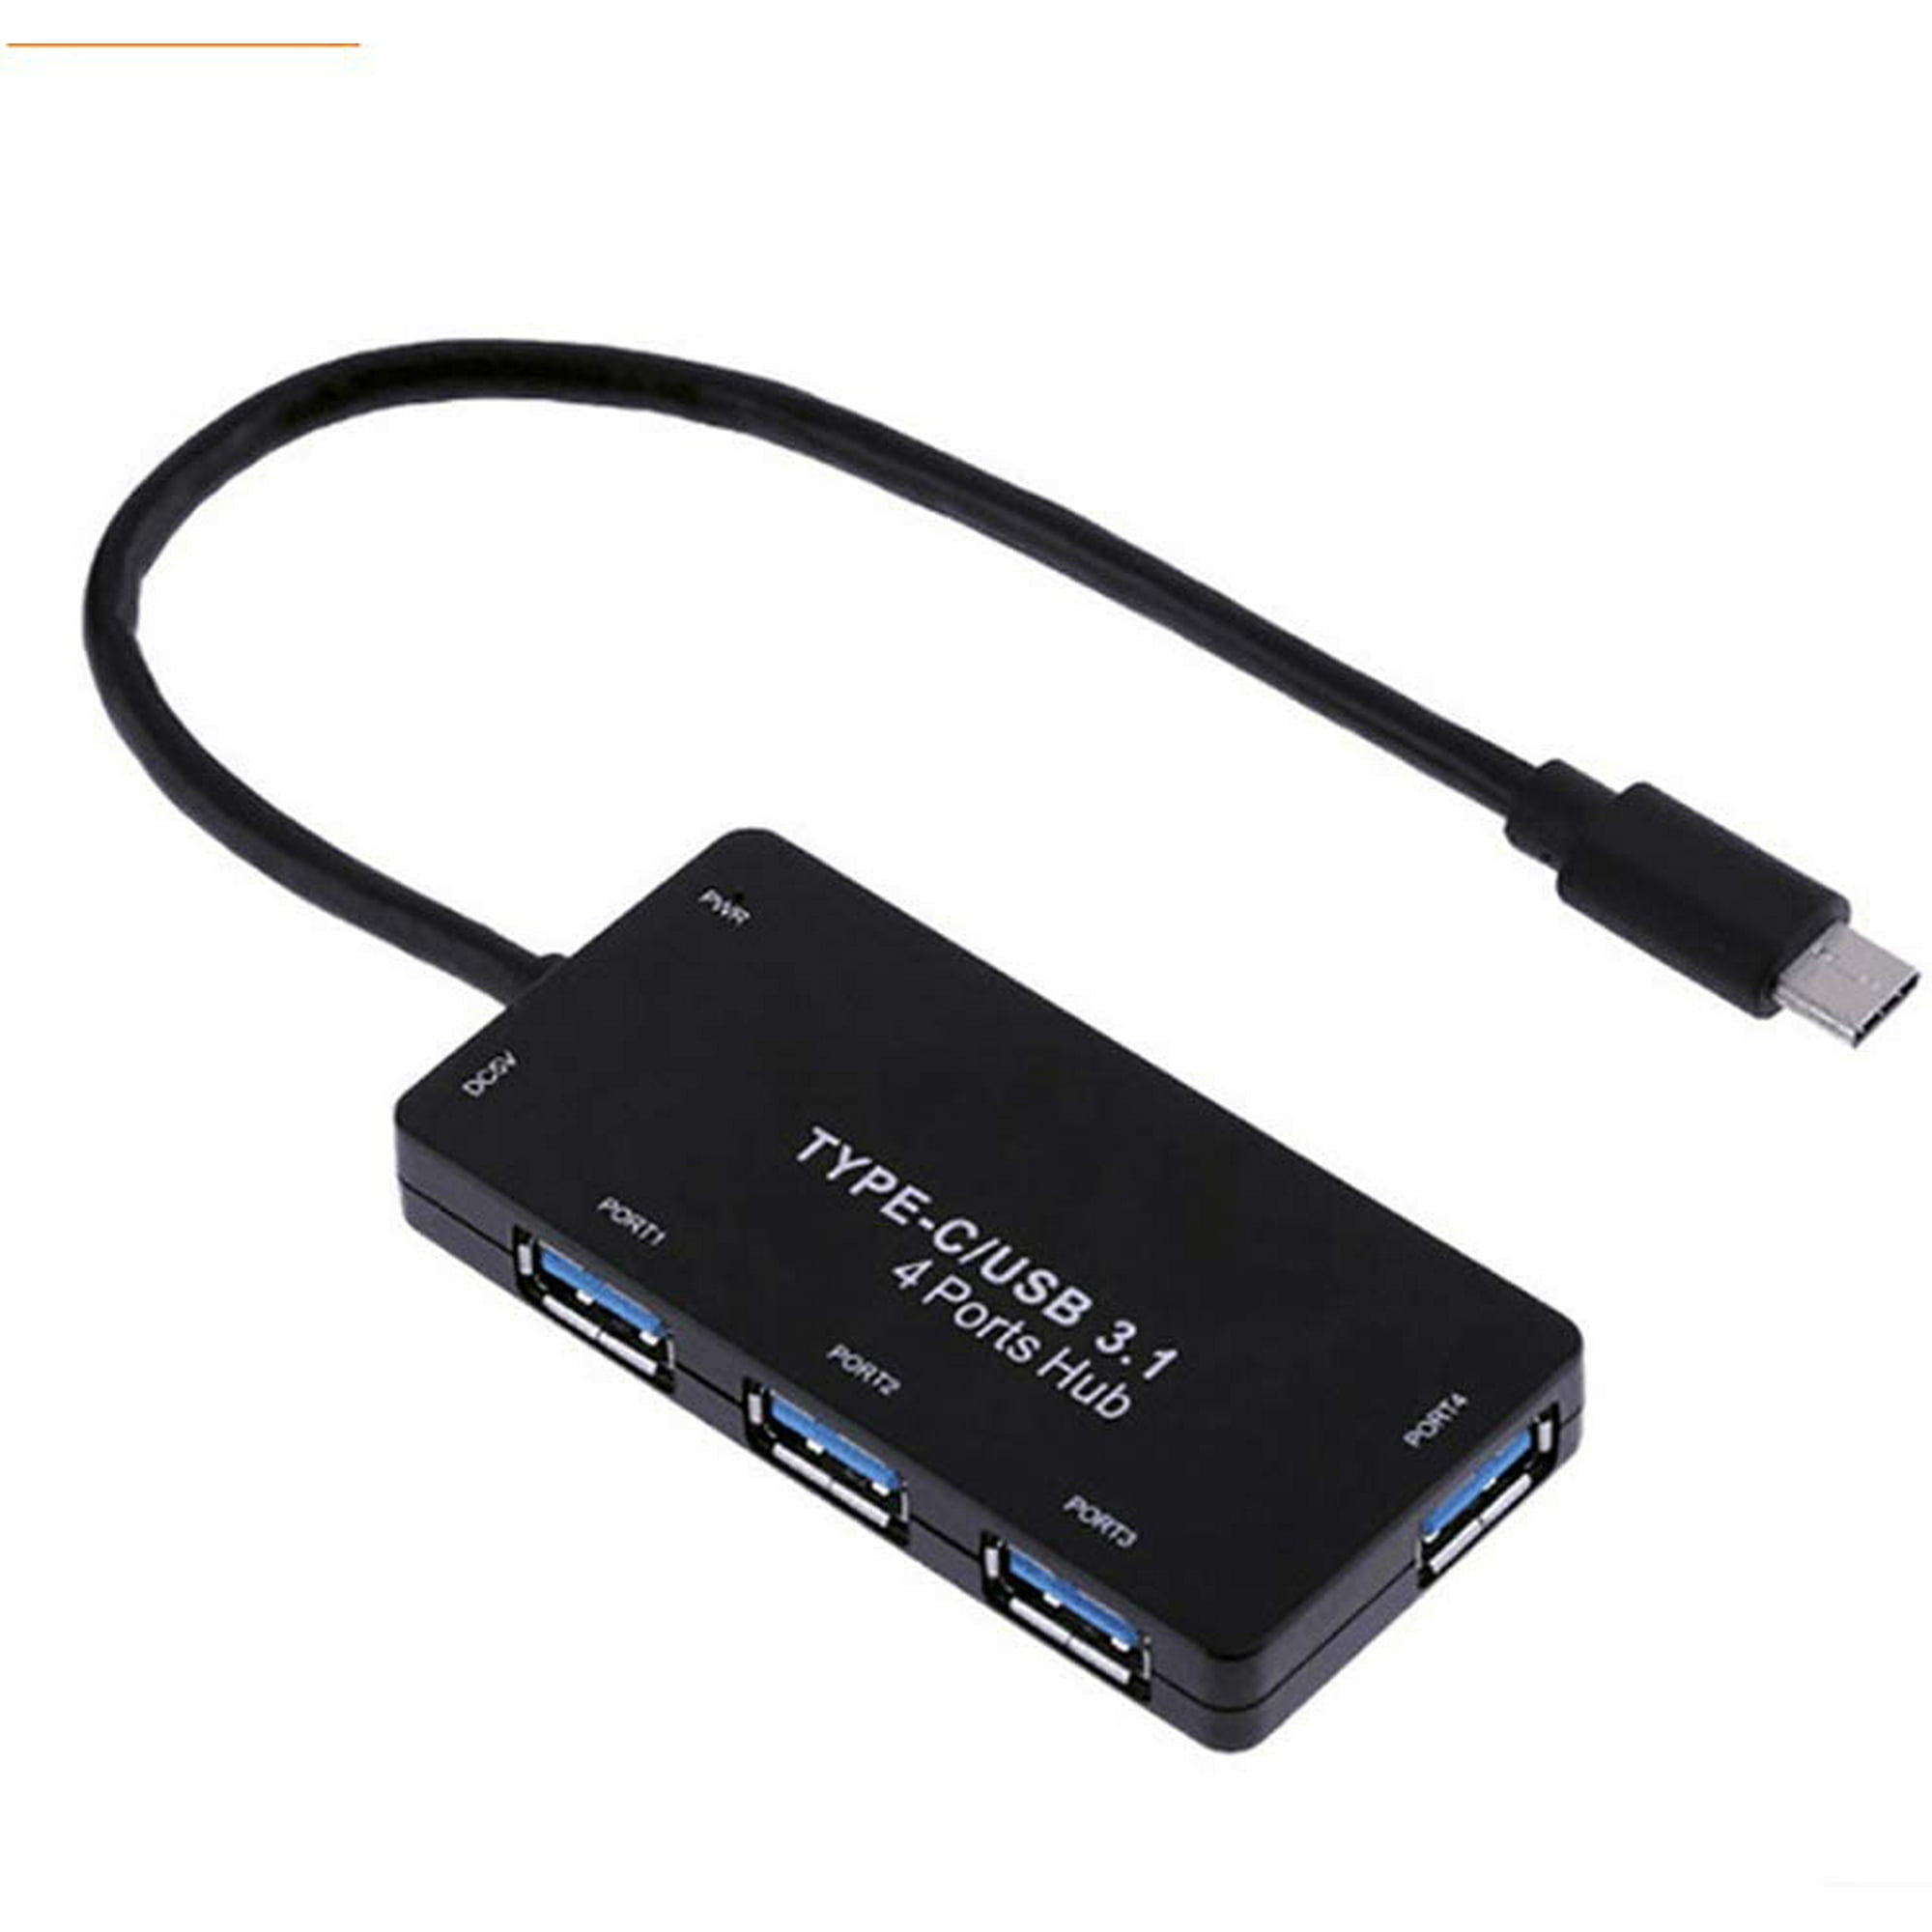 KUNOVA (TM) Super High Type C USB 3.1 4 Ports HUB Build-in USB 3.0 Cable Backward Compatible USB 2.0 | Walmart Canada